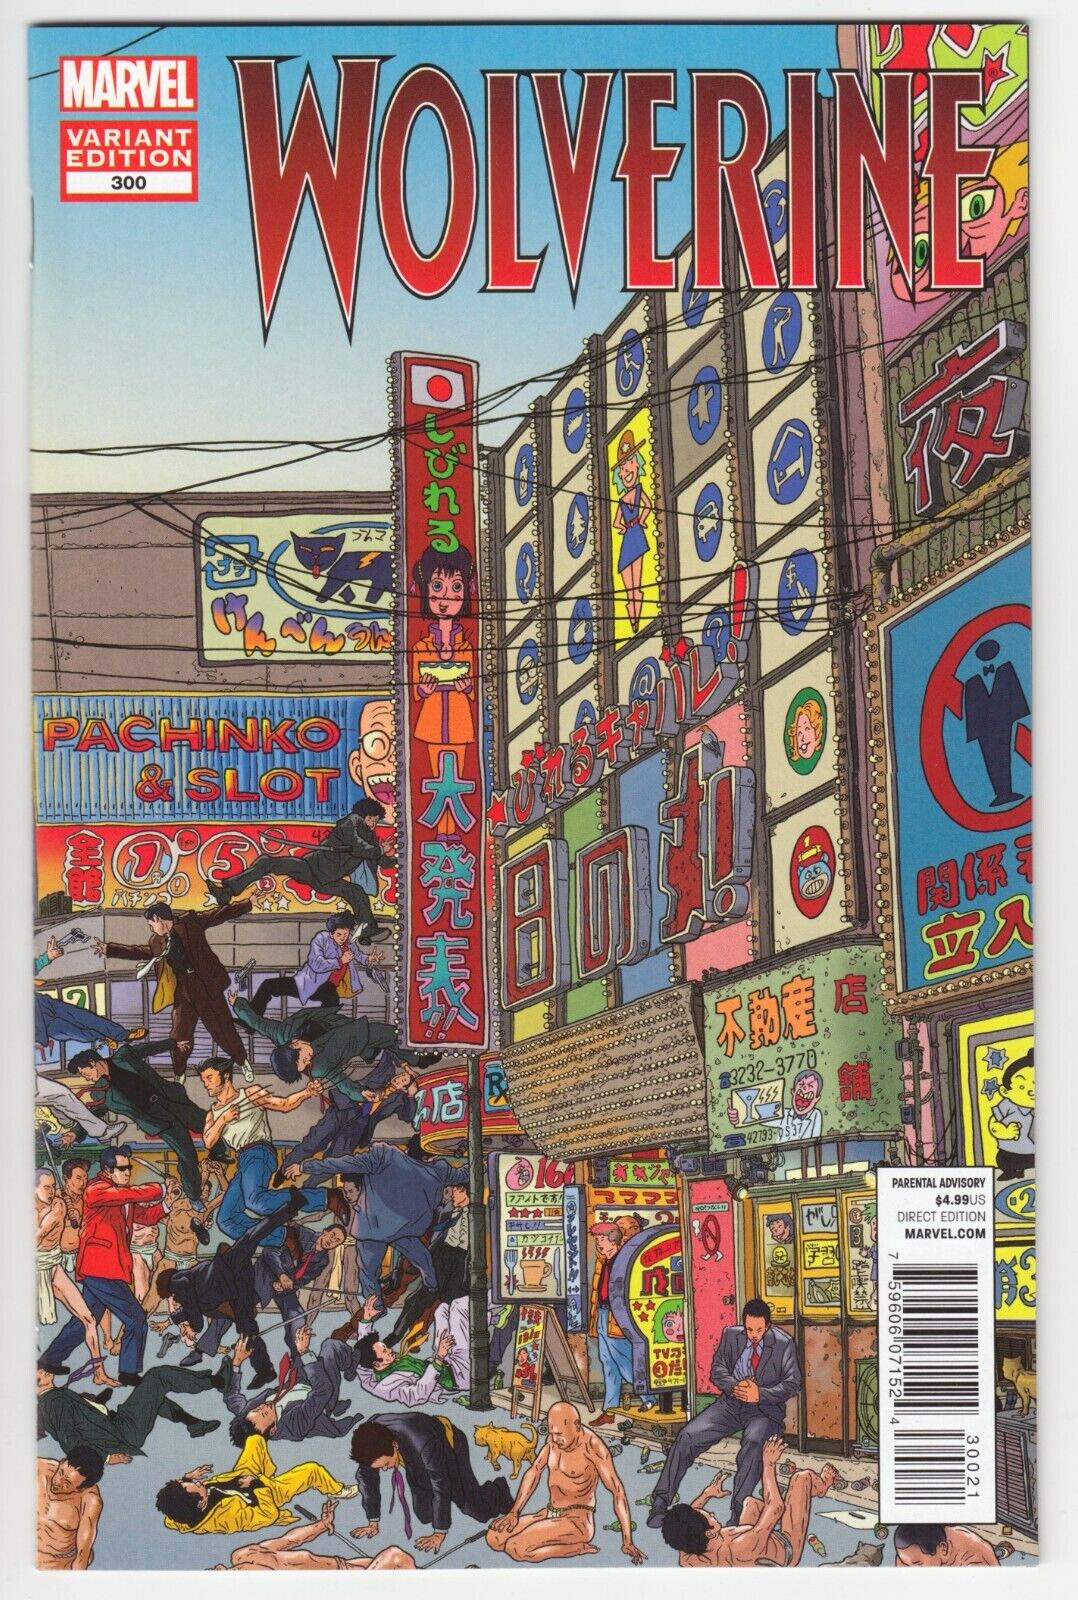 WOLVERINE #300 NM Geof Darrow 1:25 WRAPAROUND VARIANT Cover Marvel Comics 2012